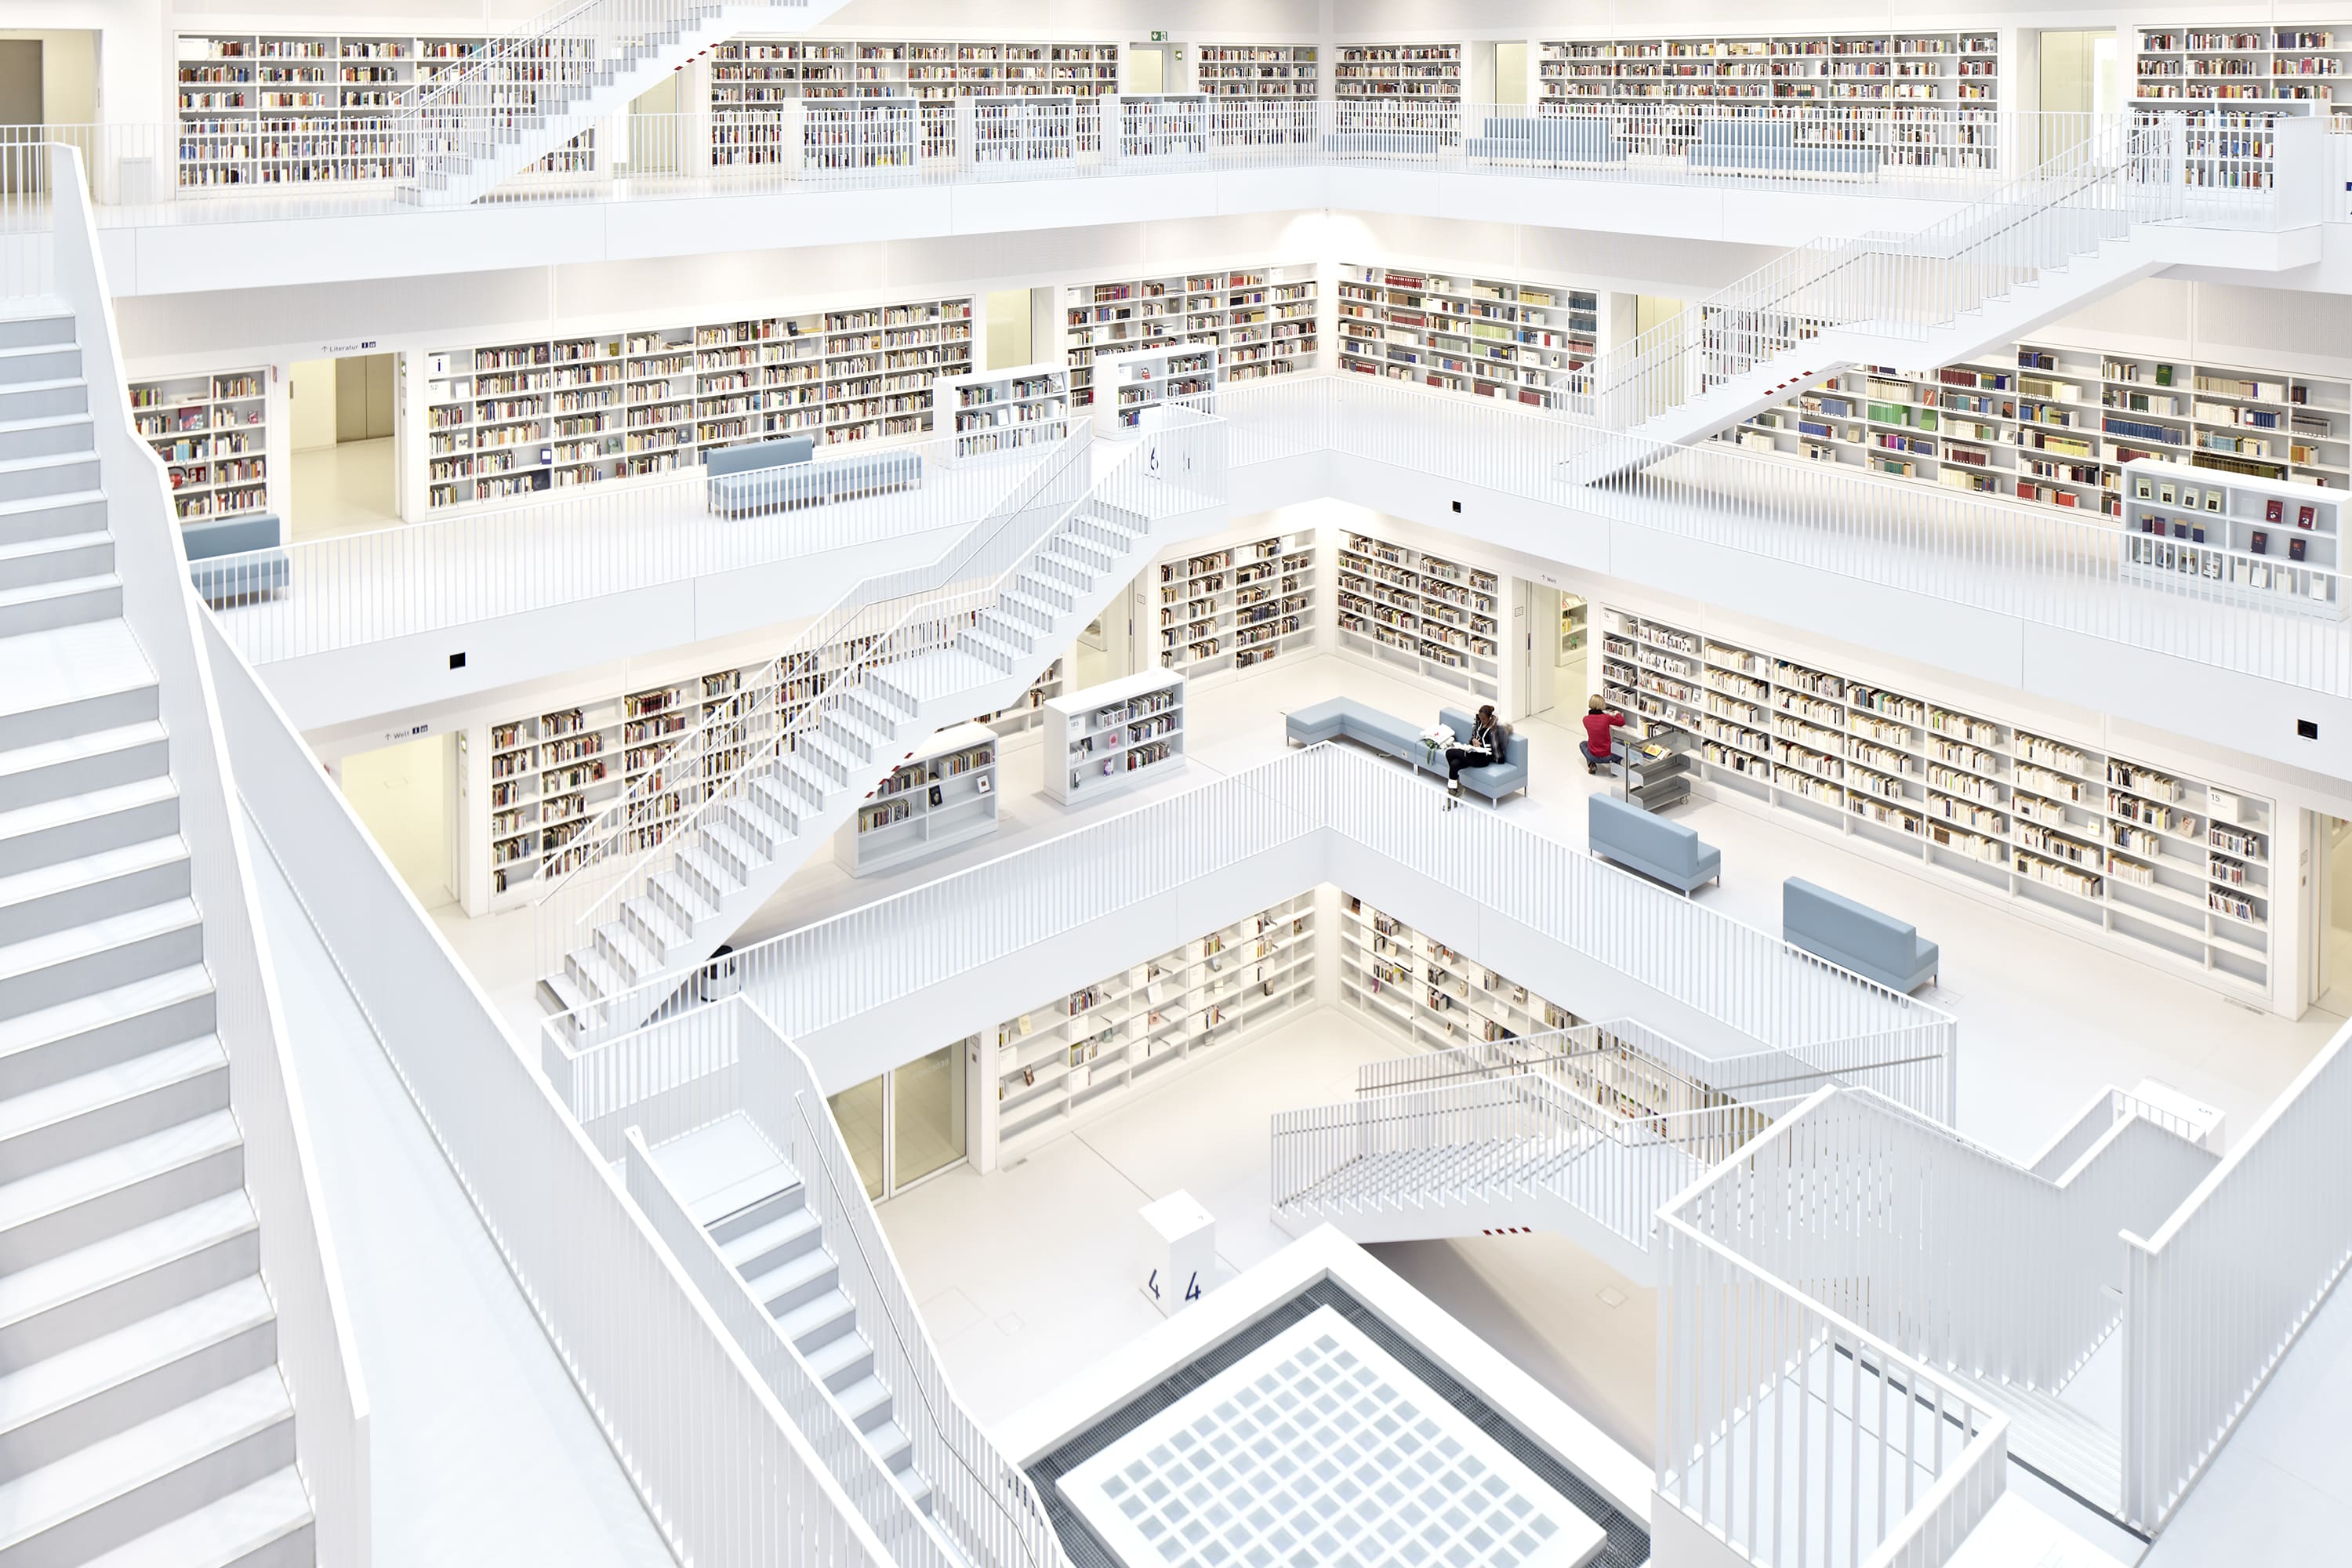 Stadtbibliothek Stuttgart, Germany 